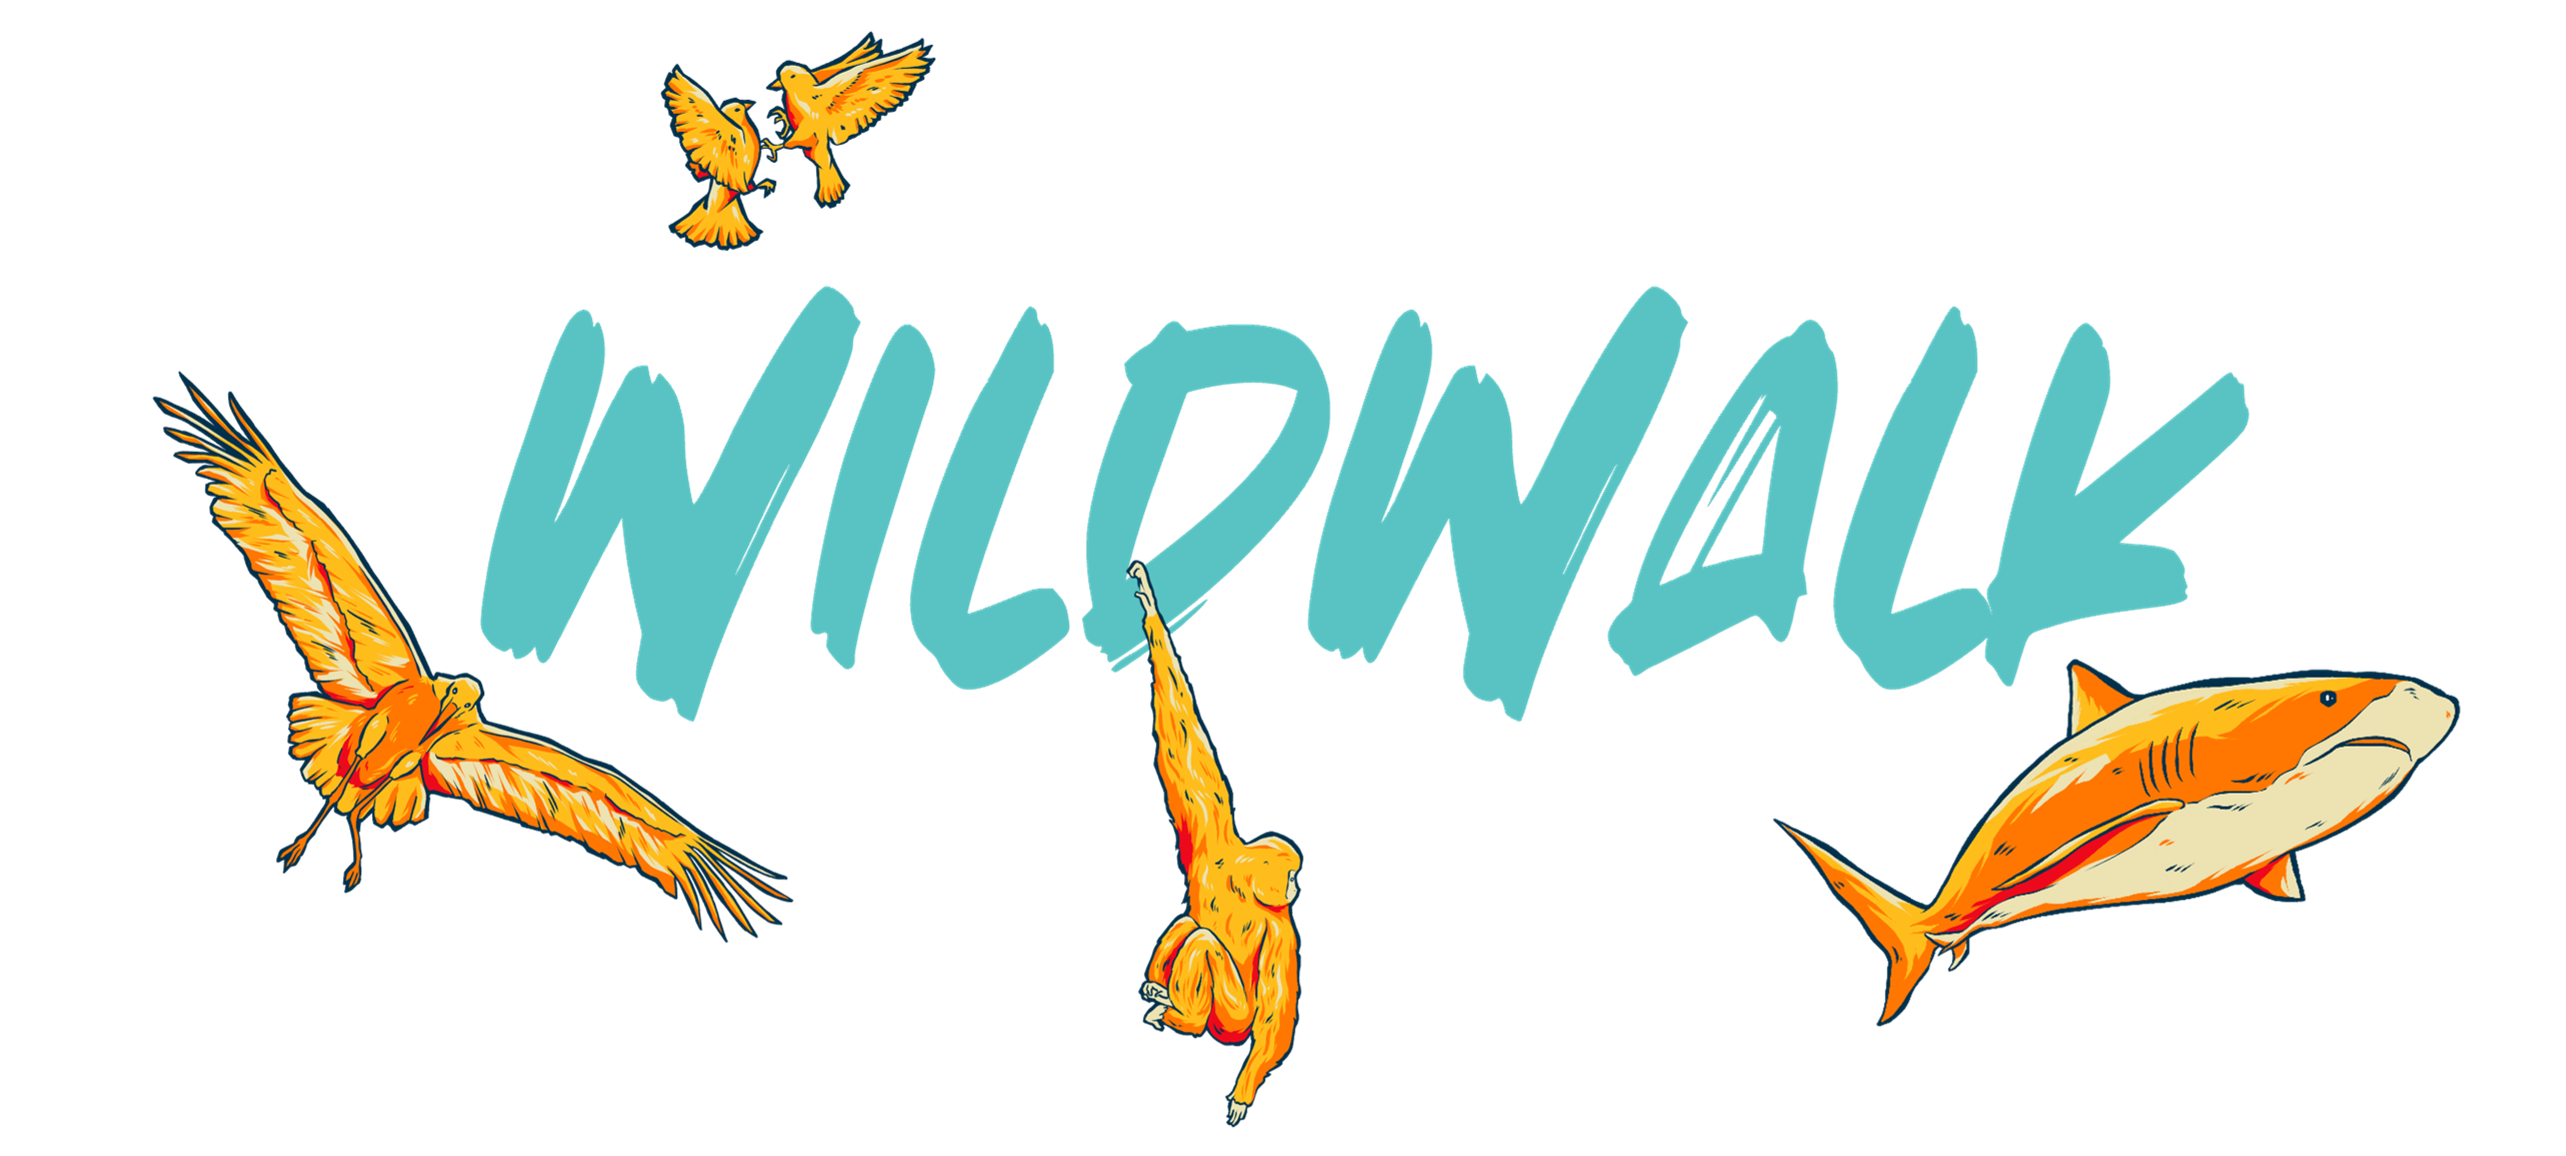 Wildwalk